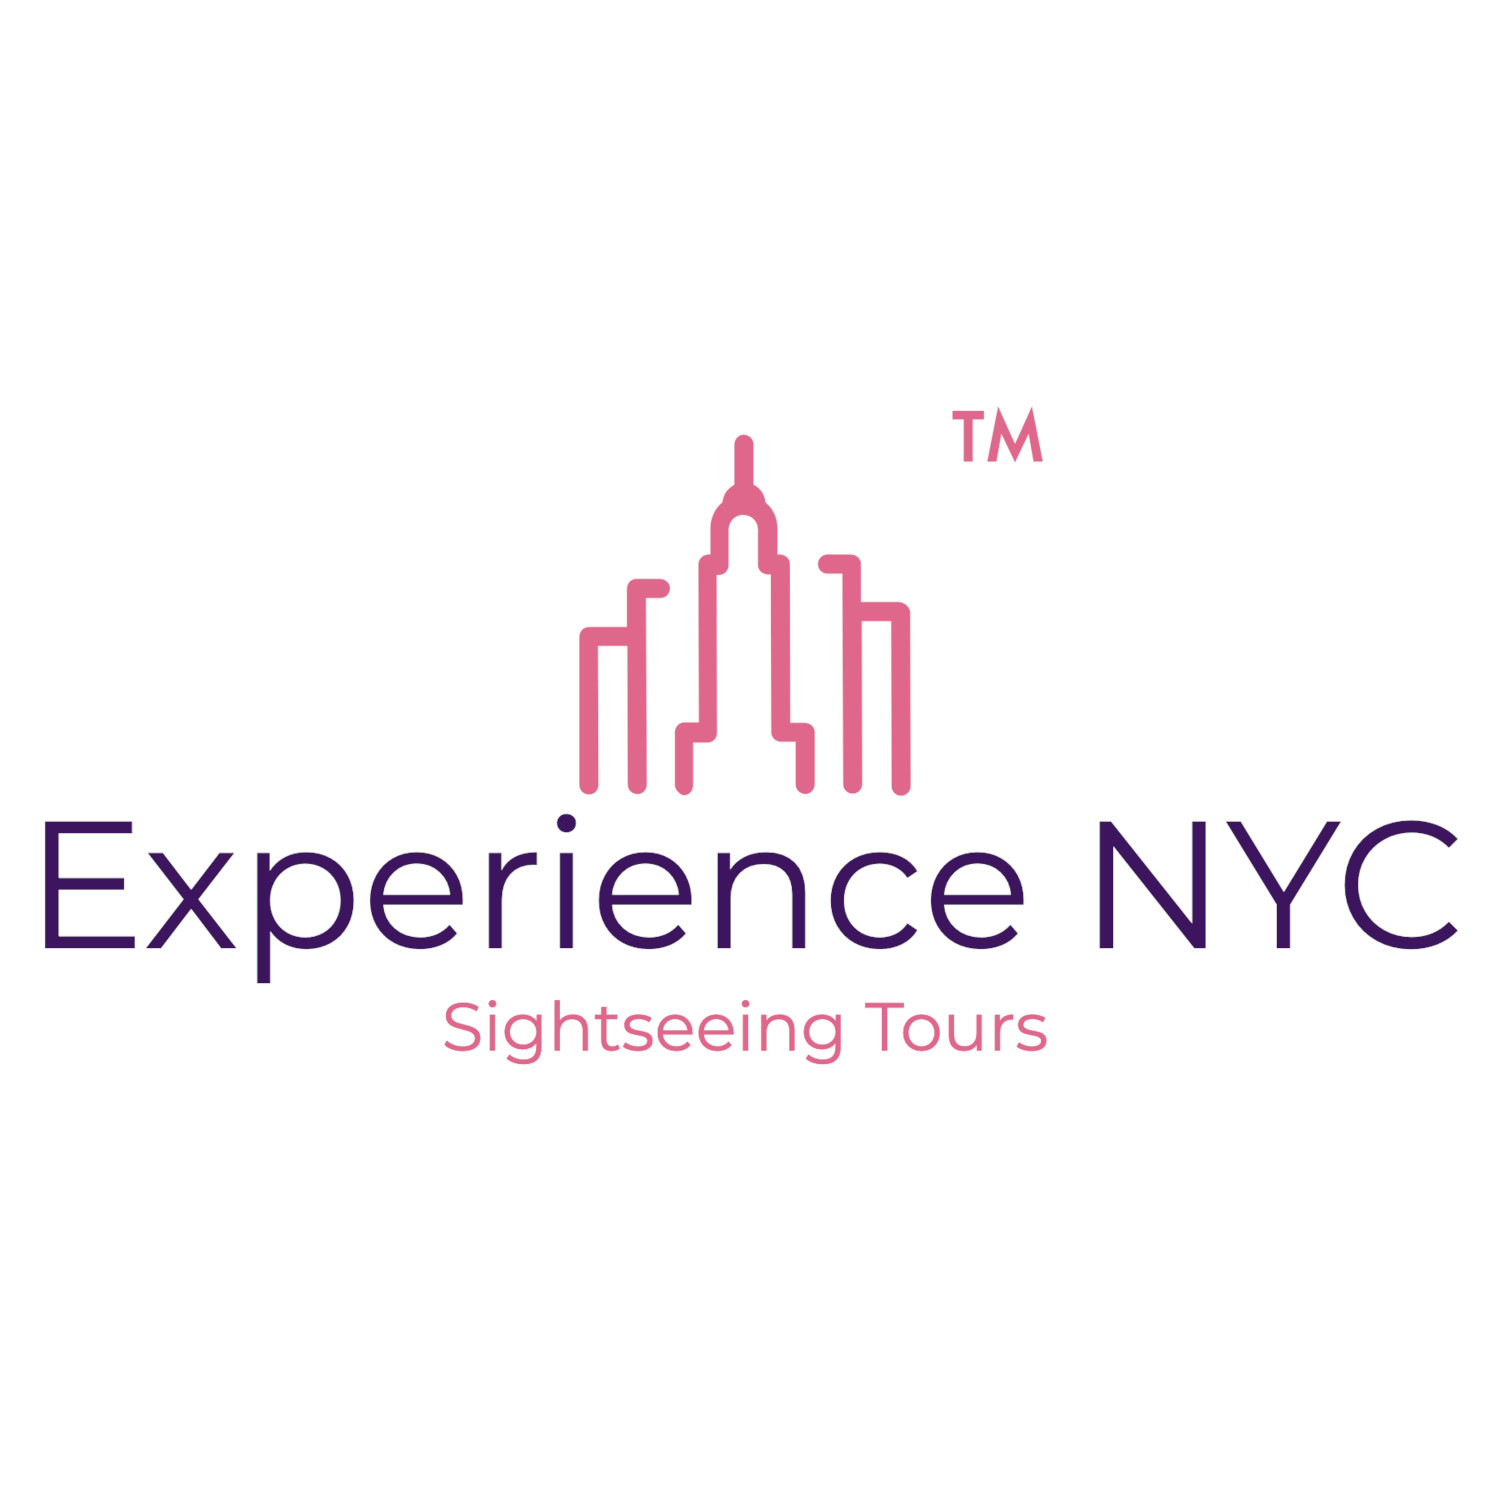 Experience NYC